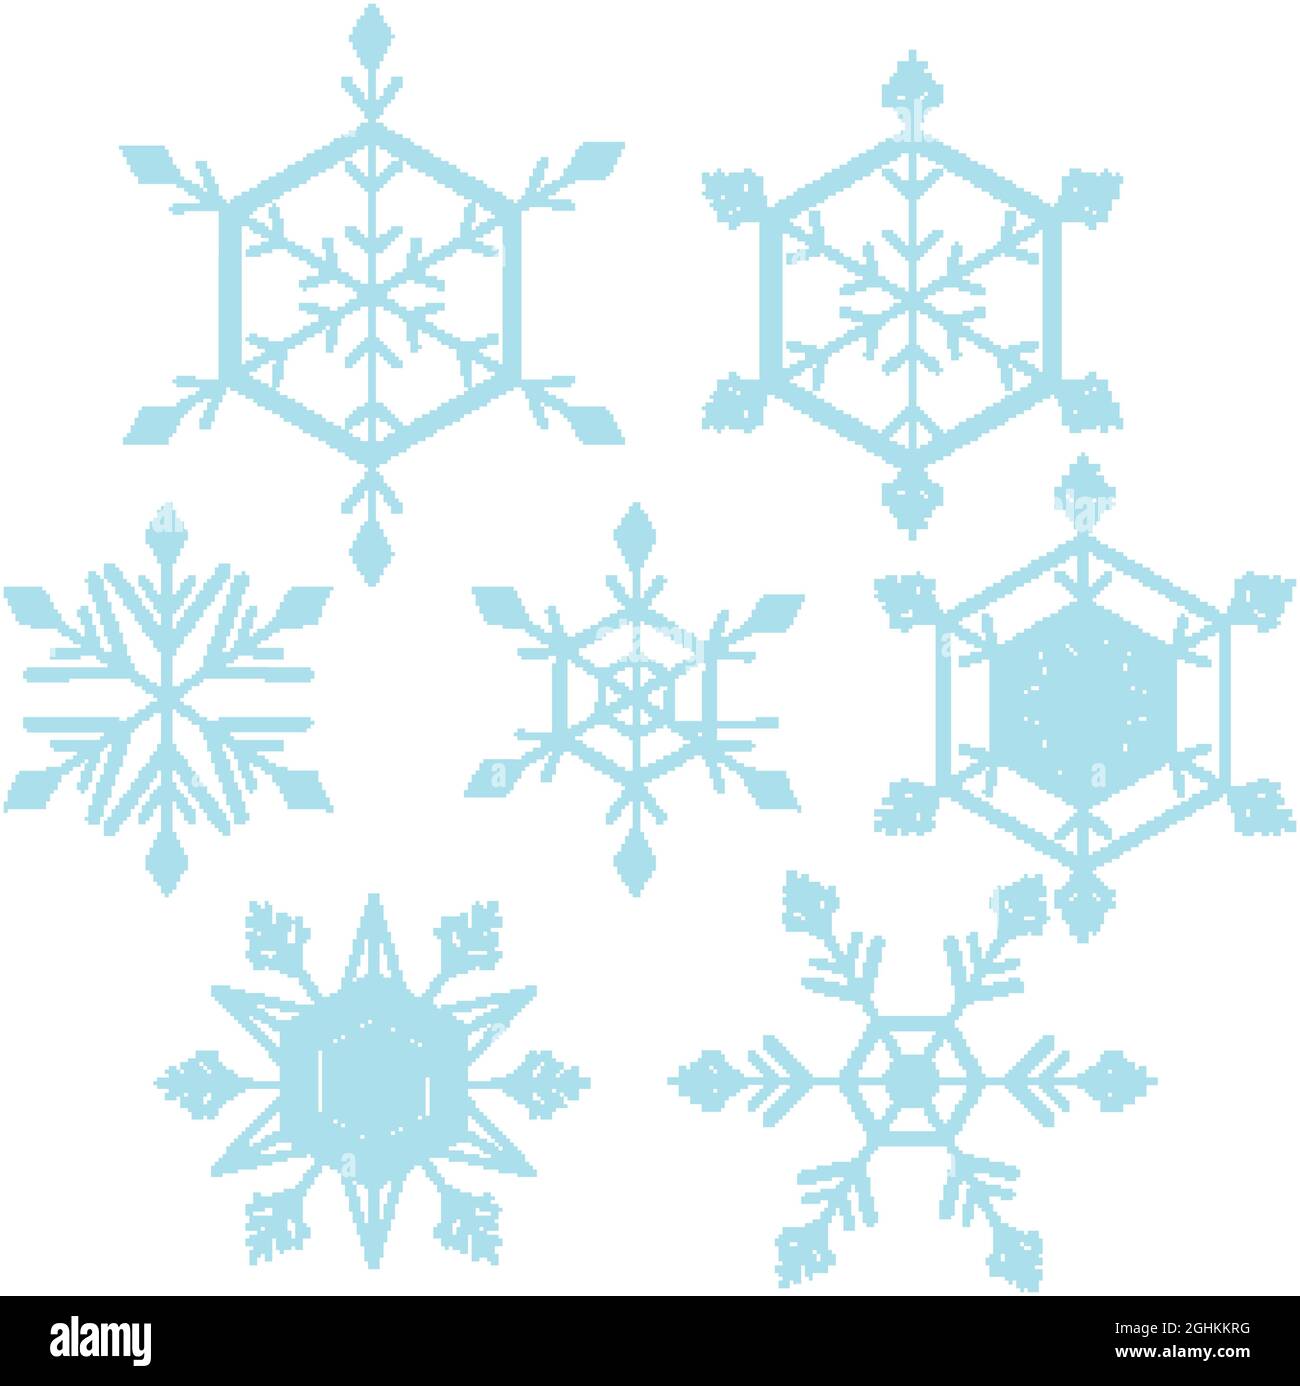 Set of snowflake design for decor illustration Stock Vector